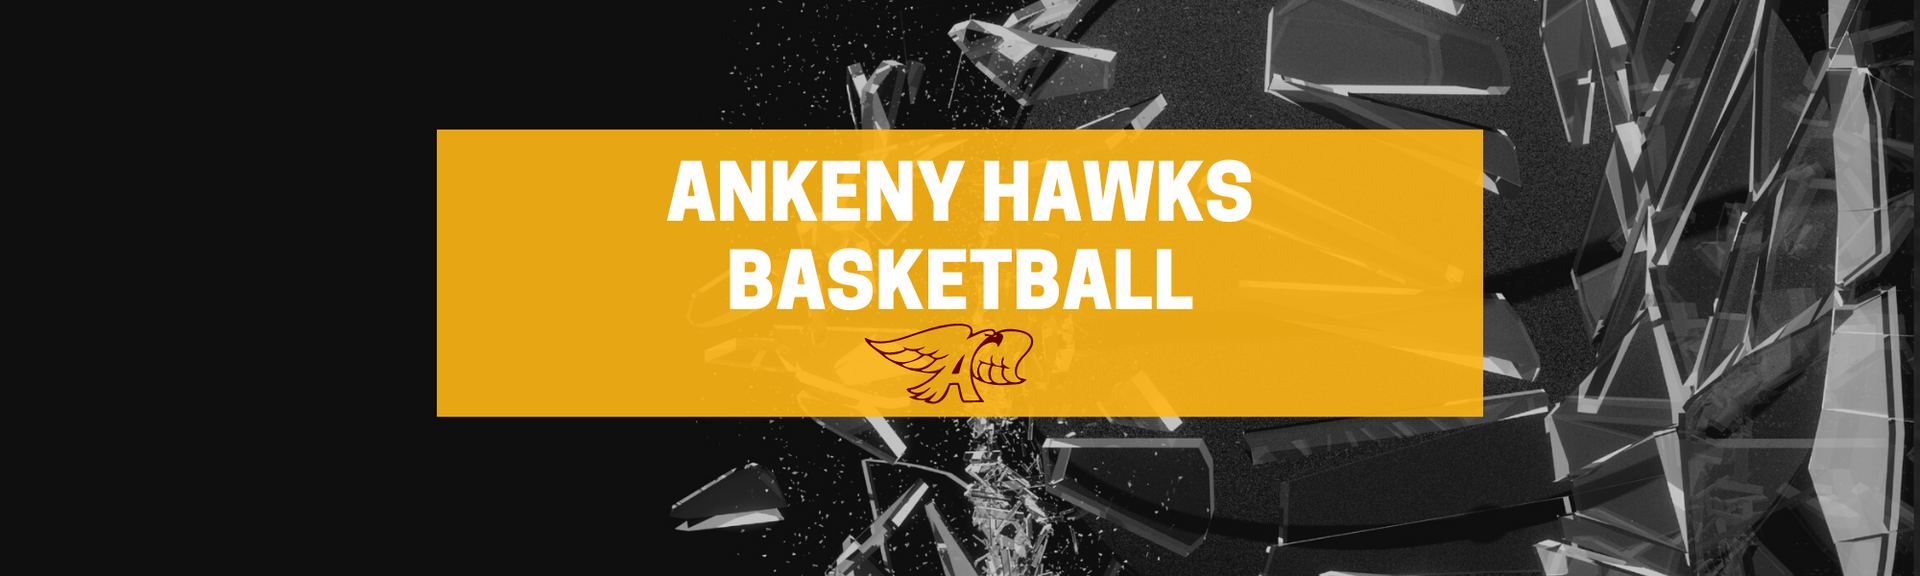 Ankeny Hawks Basketball Collection